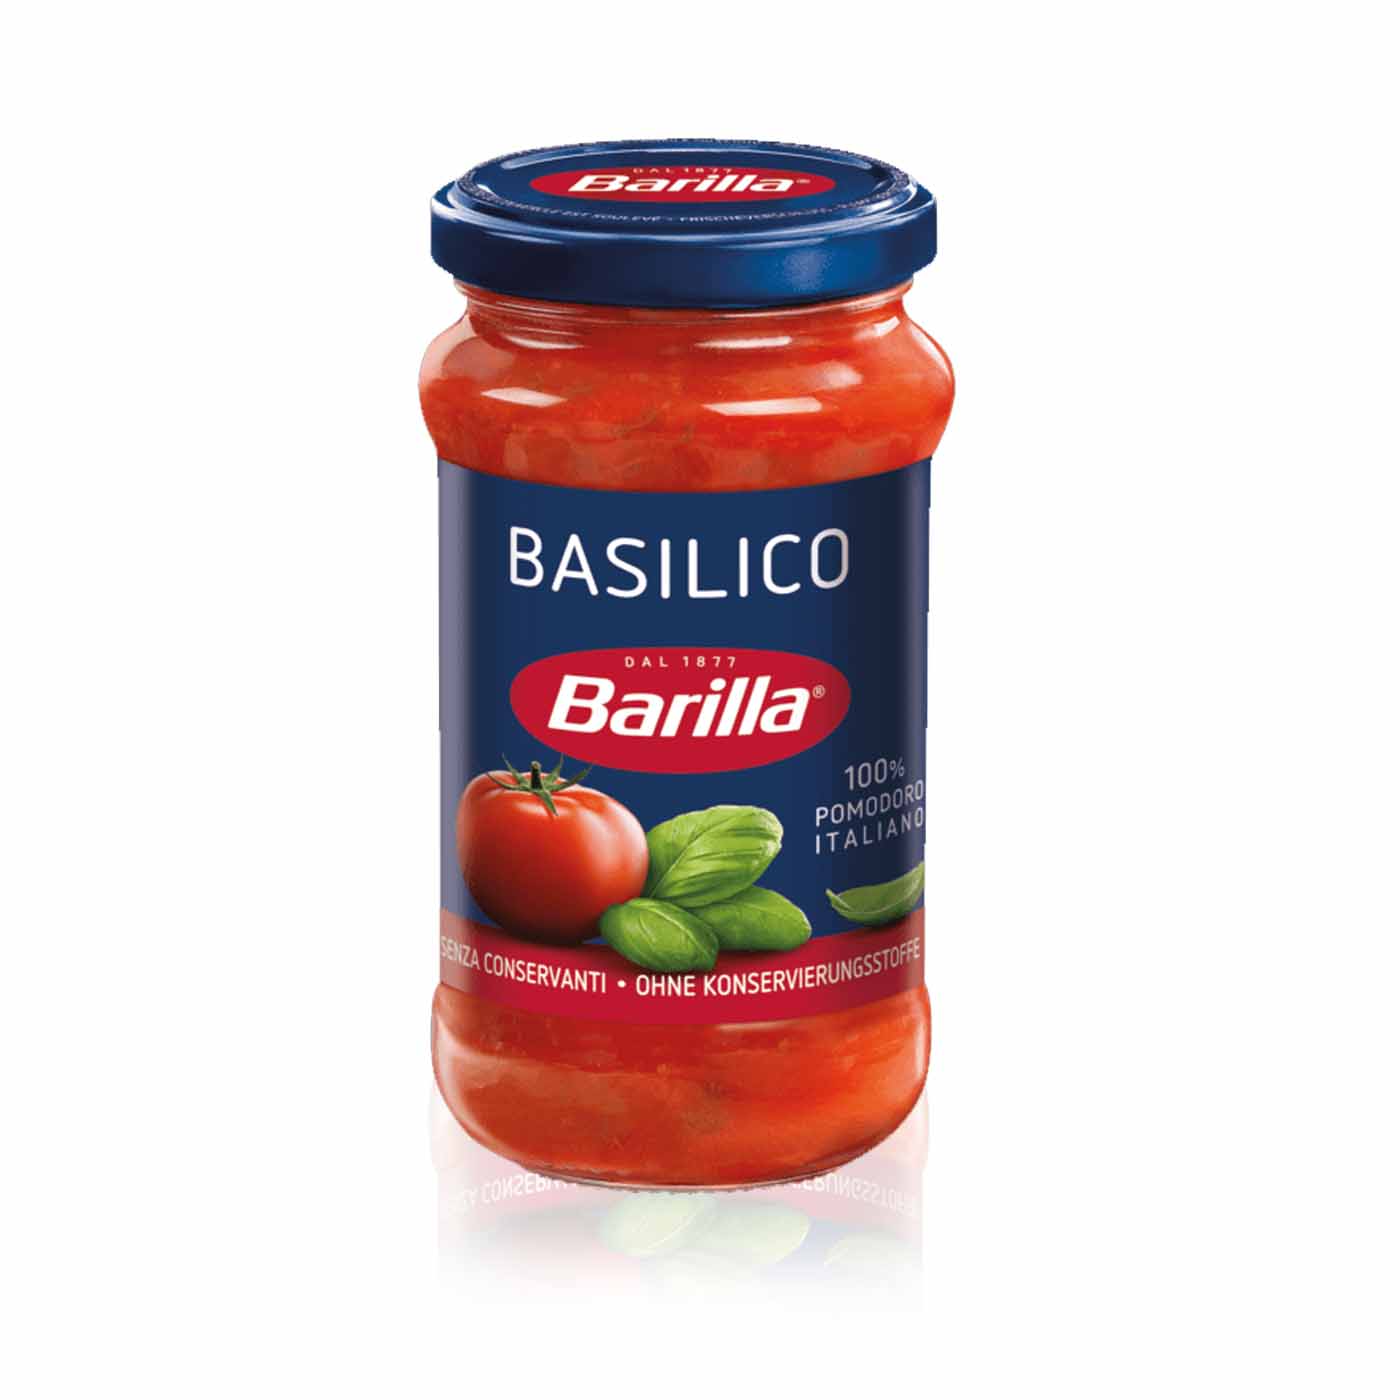 BARILLA - Basilico - Tomatensauce mit Basilikum - 0,4kg